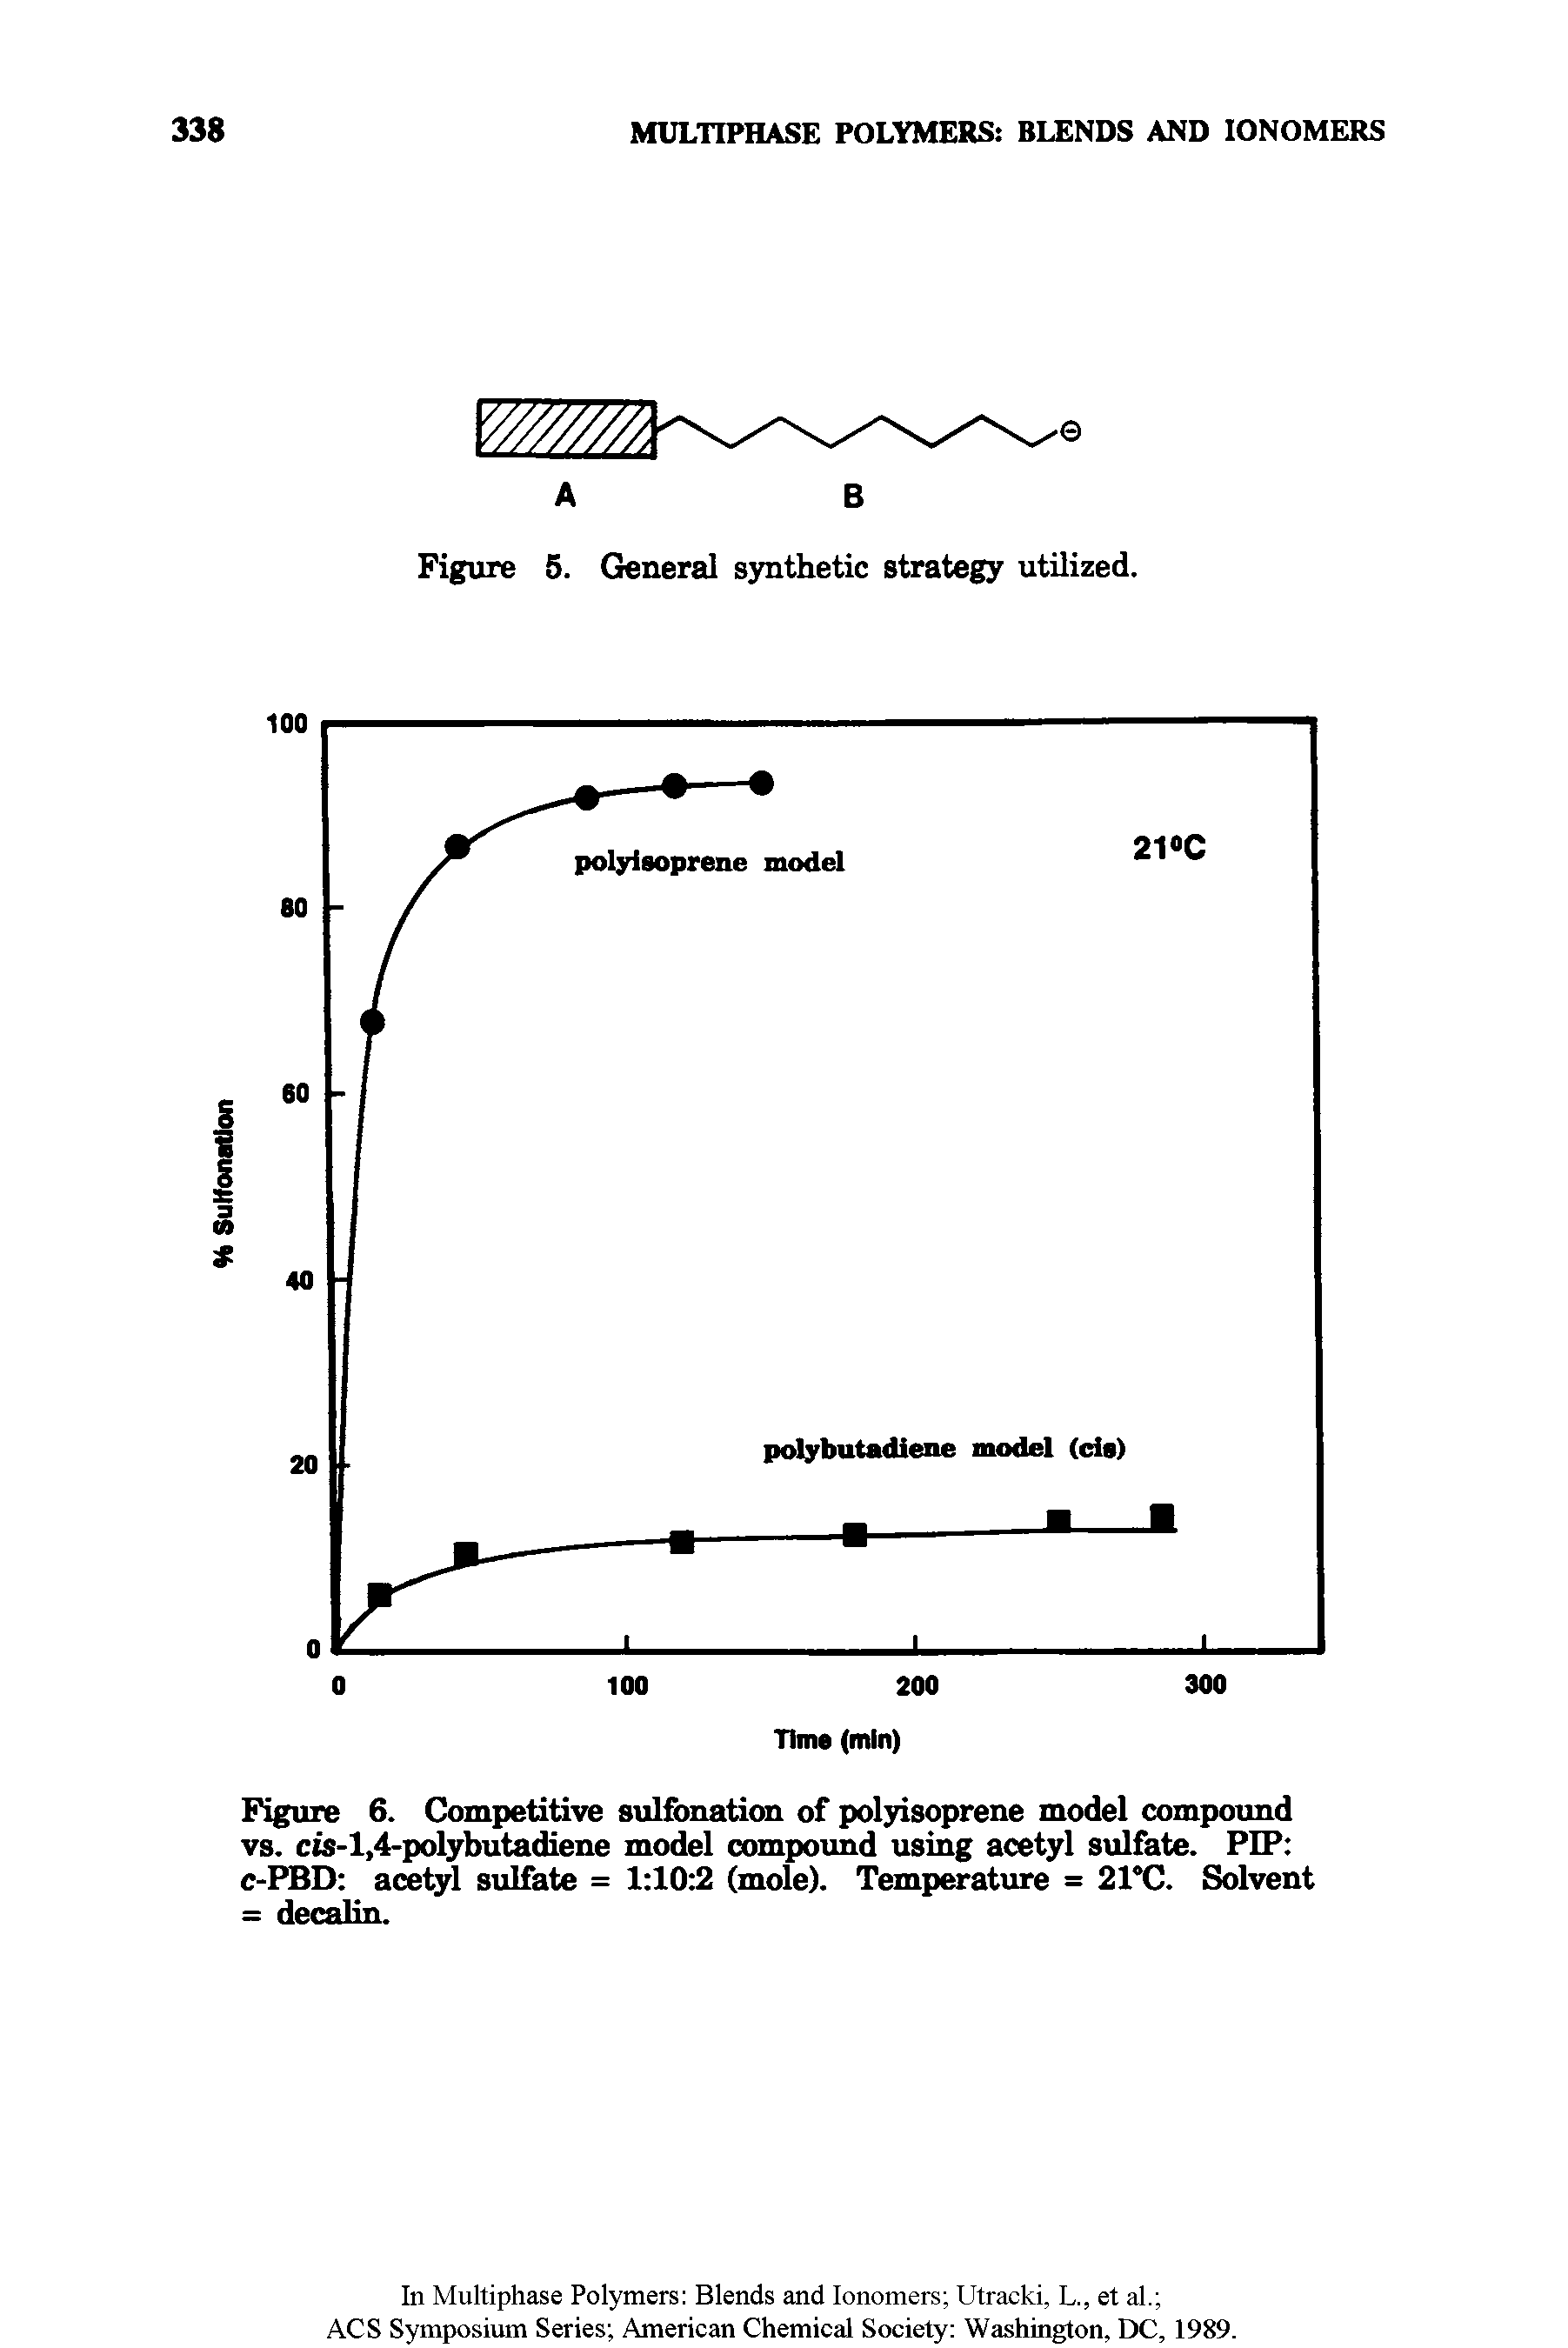 Figure 6. Competitive sulfonation of polyisoprene model compound vs. cis-l,4-polybutadiene model compound using acetyl sulfate. PIP c-PBD acetyl sulfate = 1 10 2 (mole). Temperature = 2rC. Solvent = decalin.